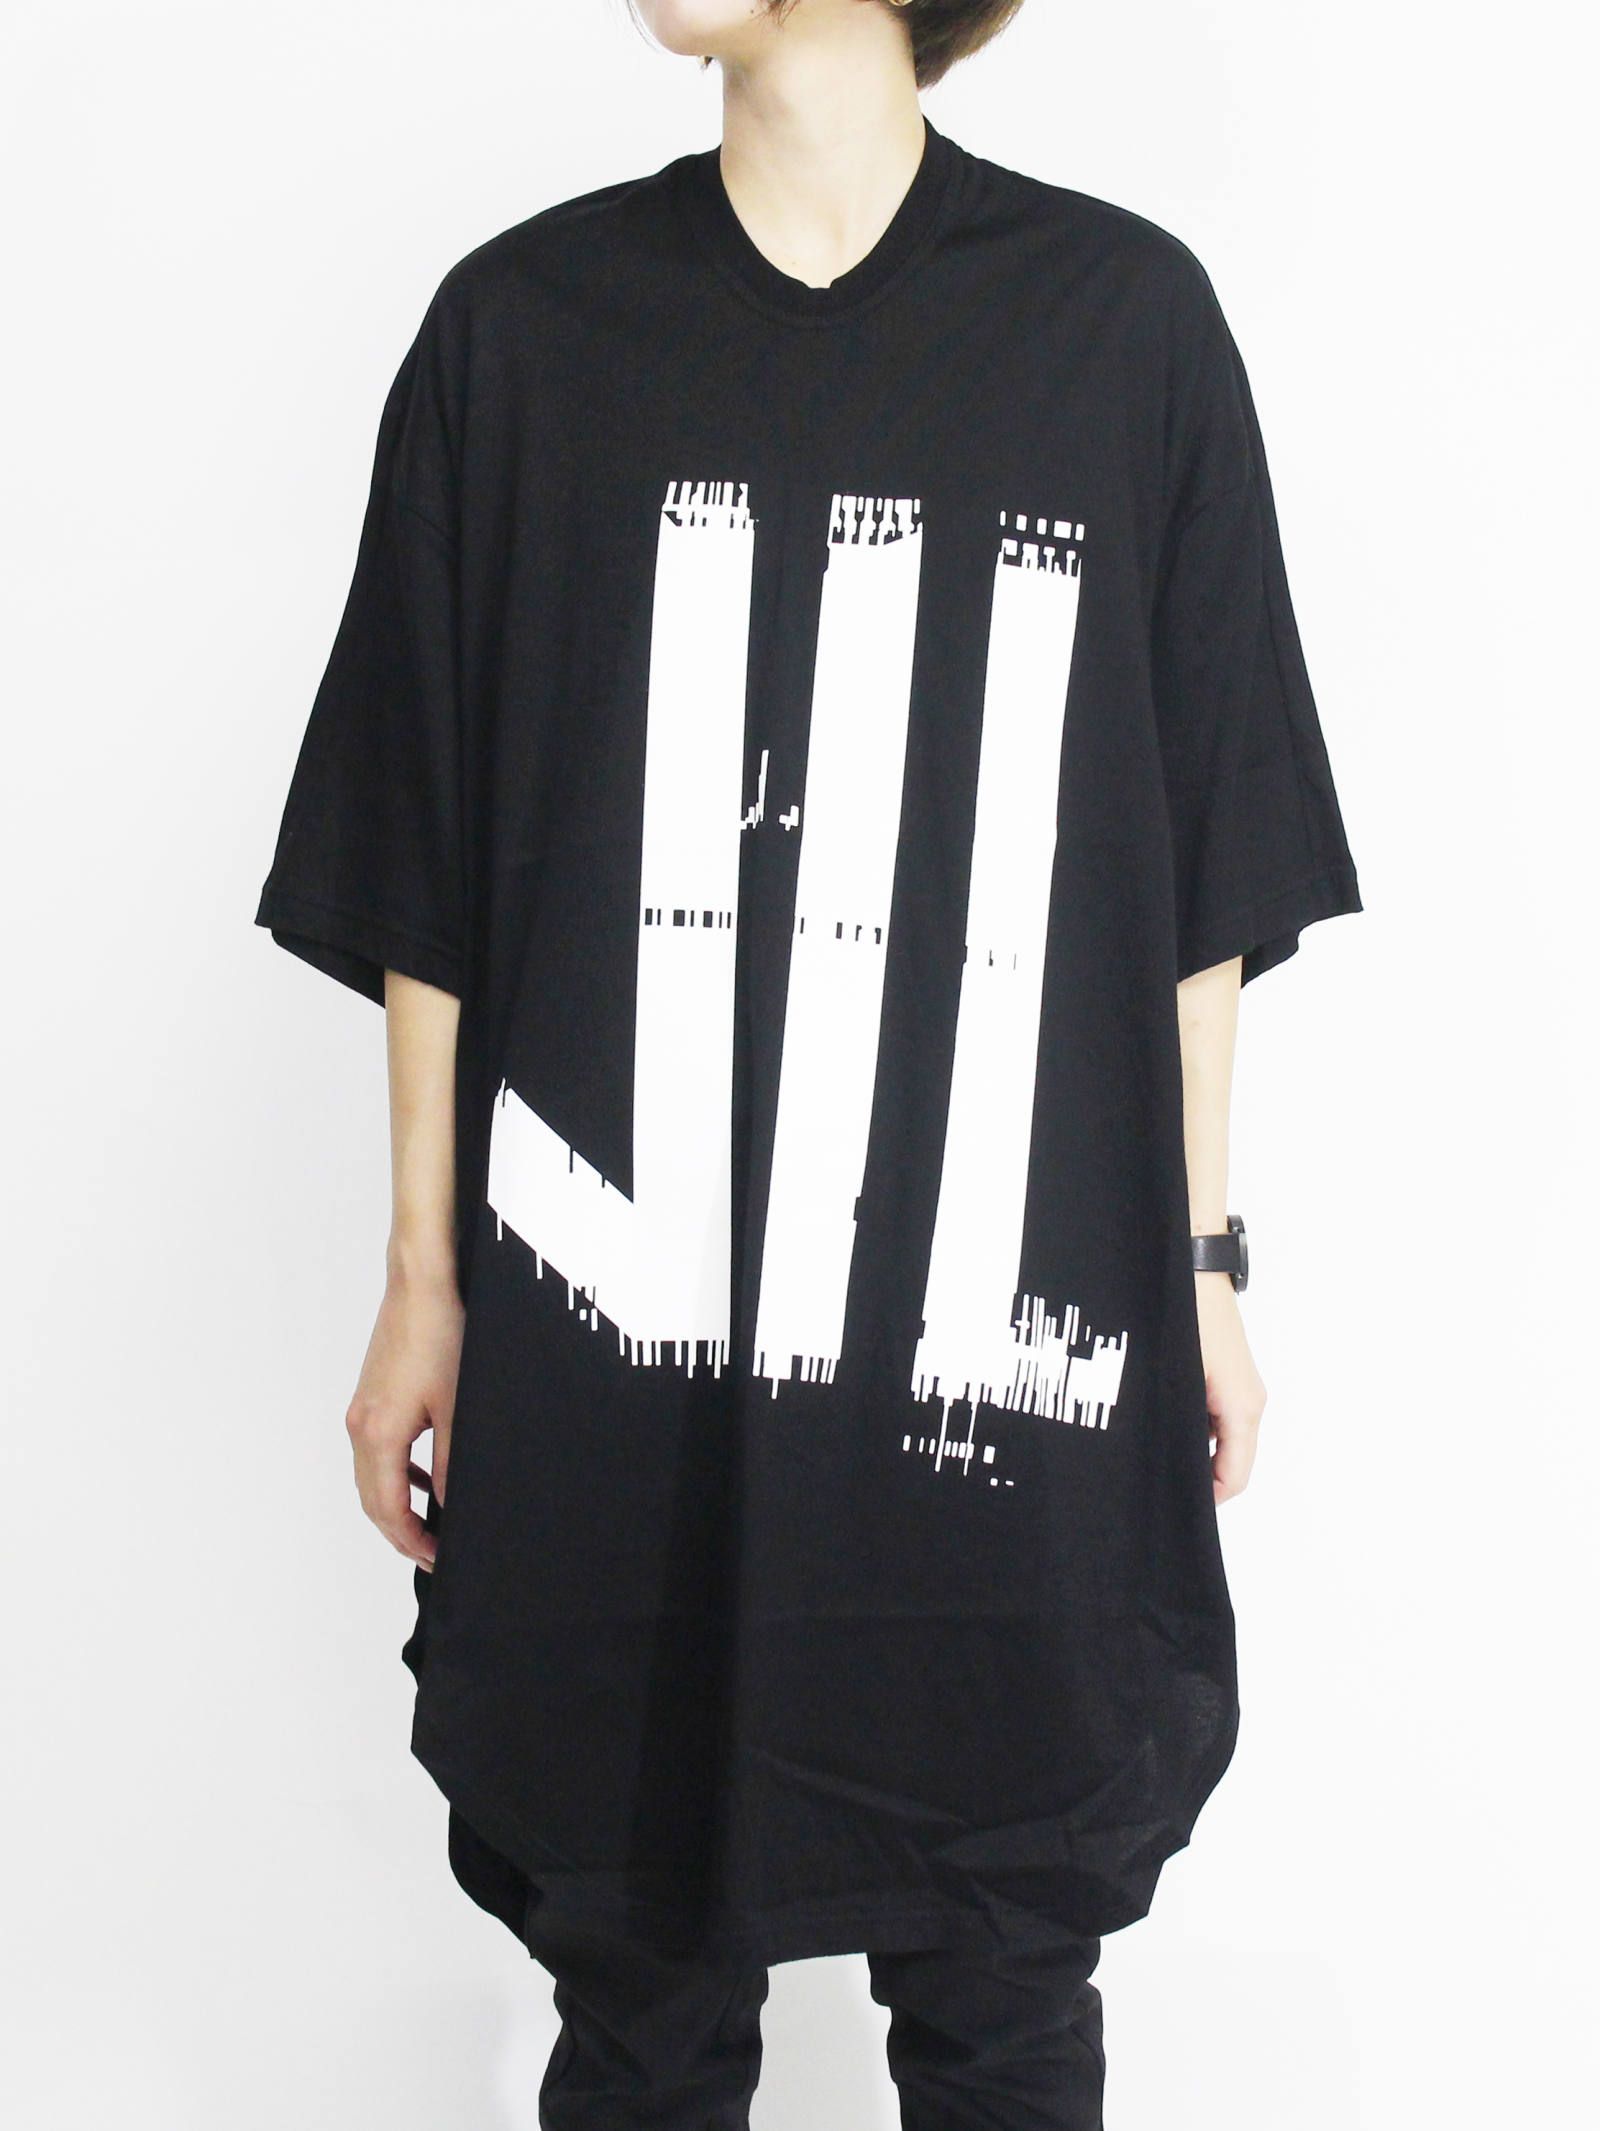 NILoS - 家紋Tシャツ - KAMON ROUND T-SHIRT - BLACK×BLACK | ADDICT ...